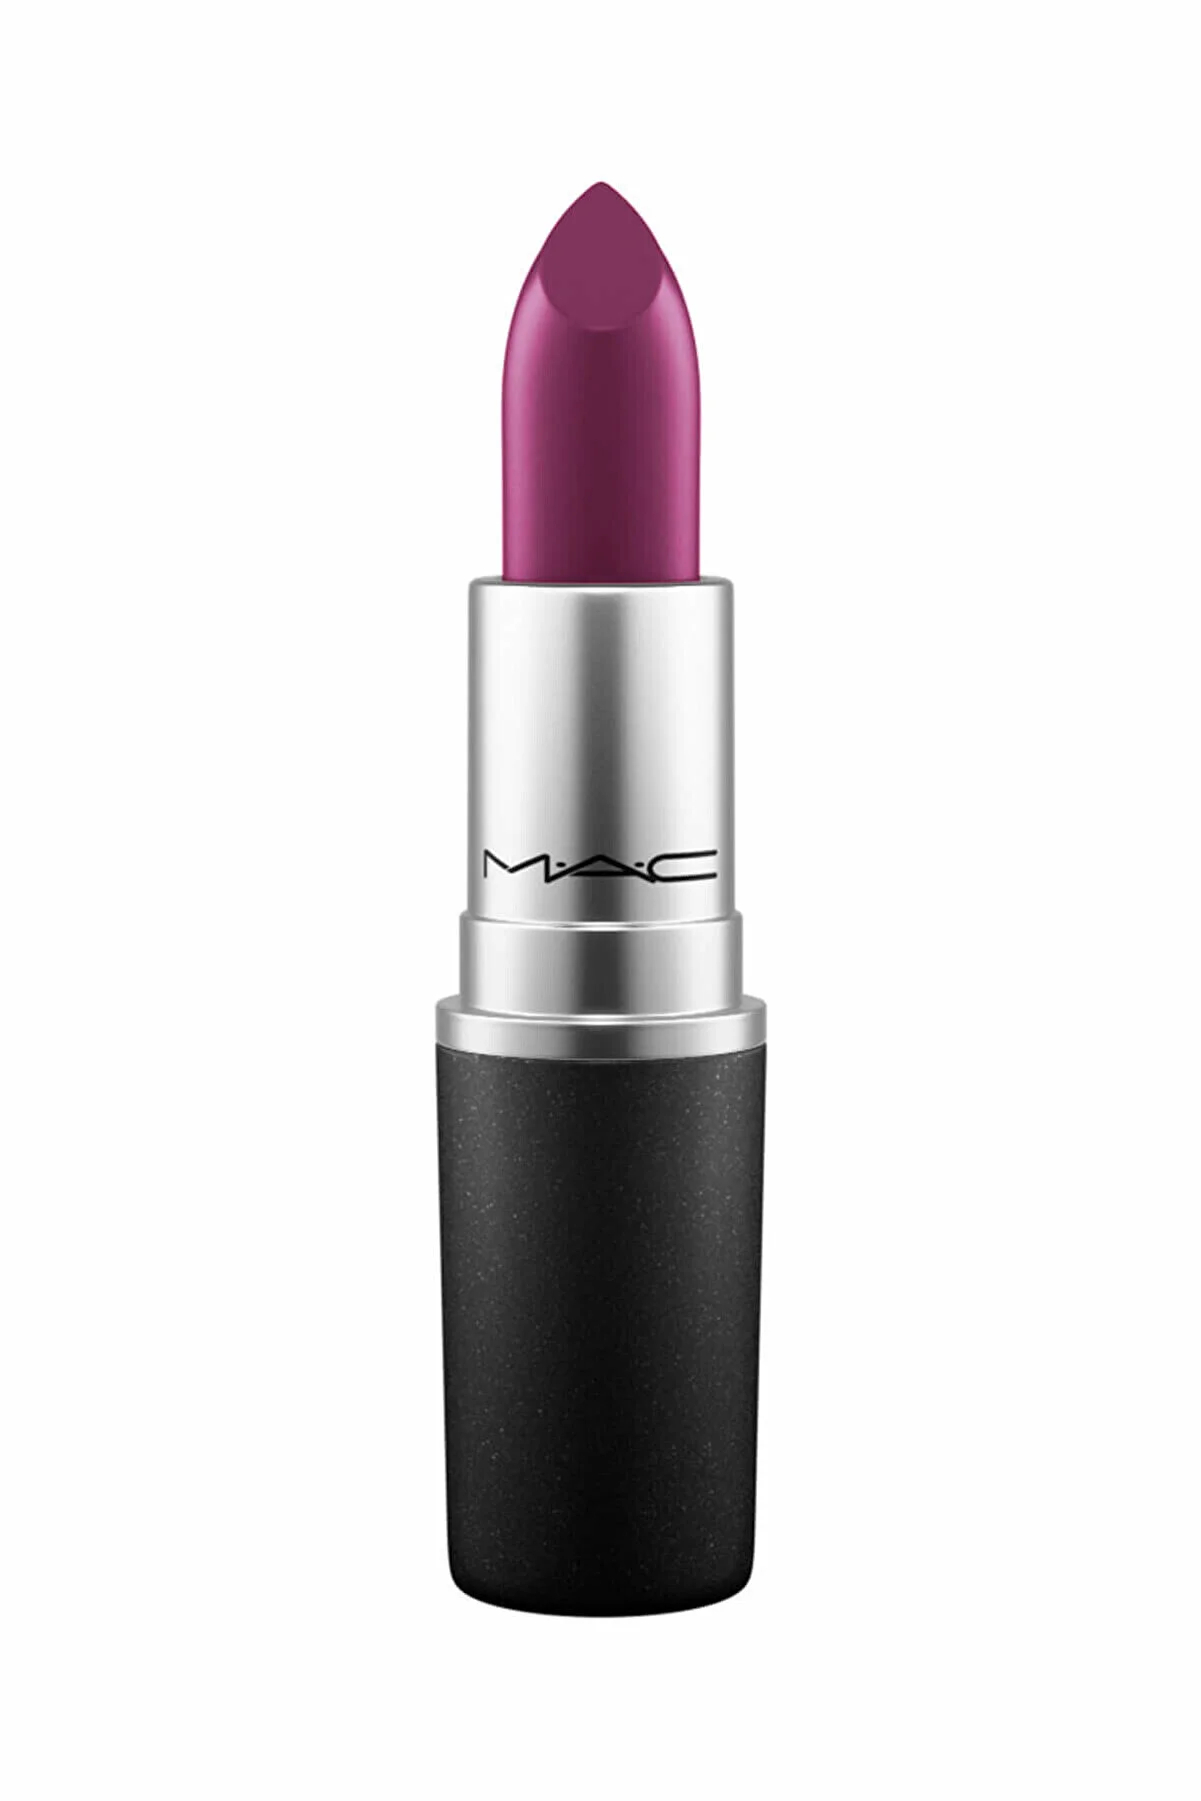 MAC Cosmetics Saténová rtěnka (Satin Lipstick) 3 g Rebel